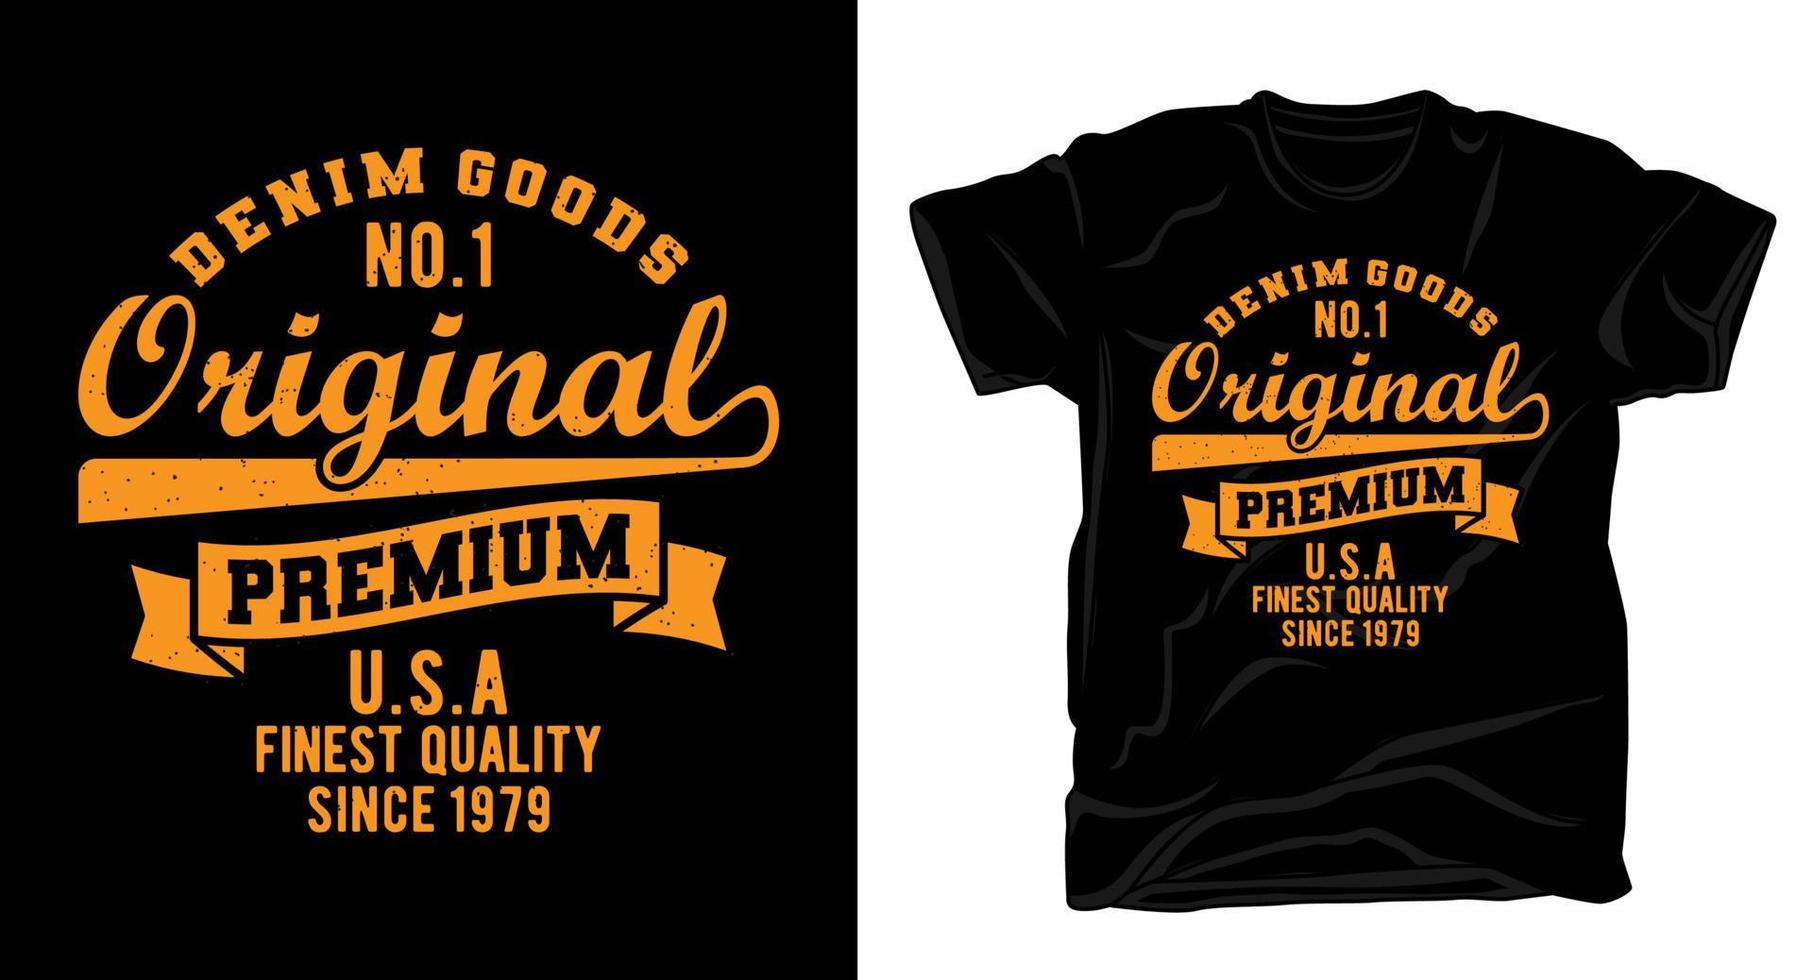 Denim goods original typography for t-shirt design vector